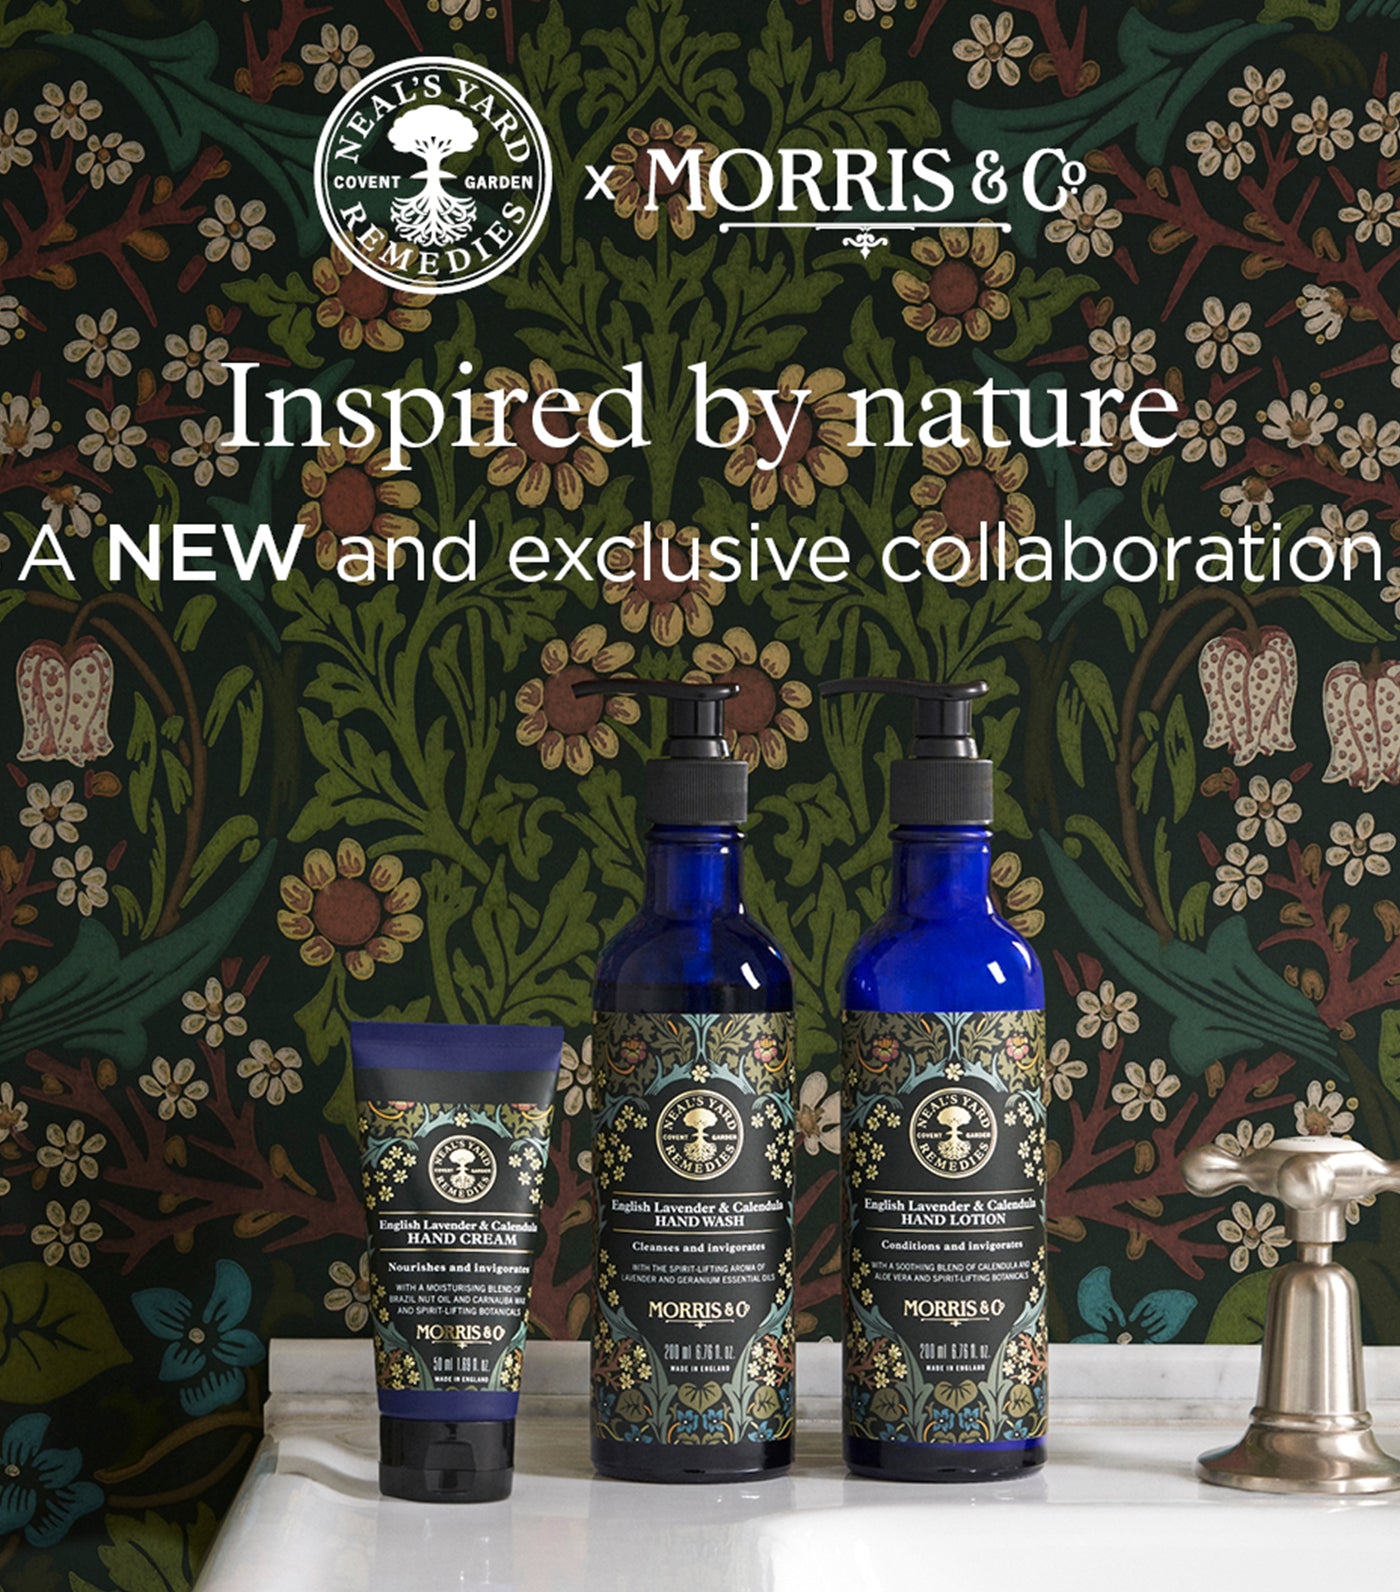 Morris & Co. English Lavender and Calendula Hand Lotion